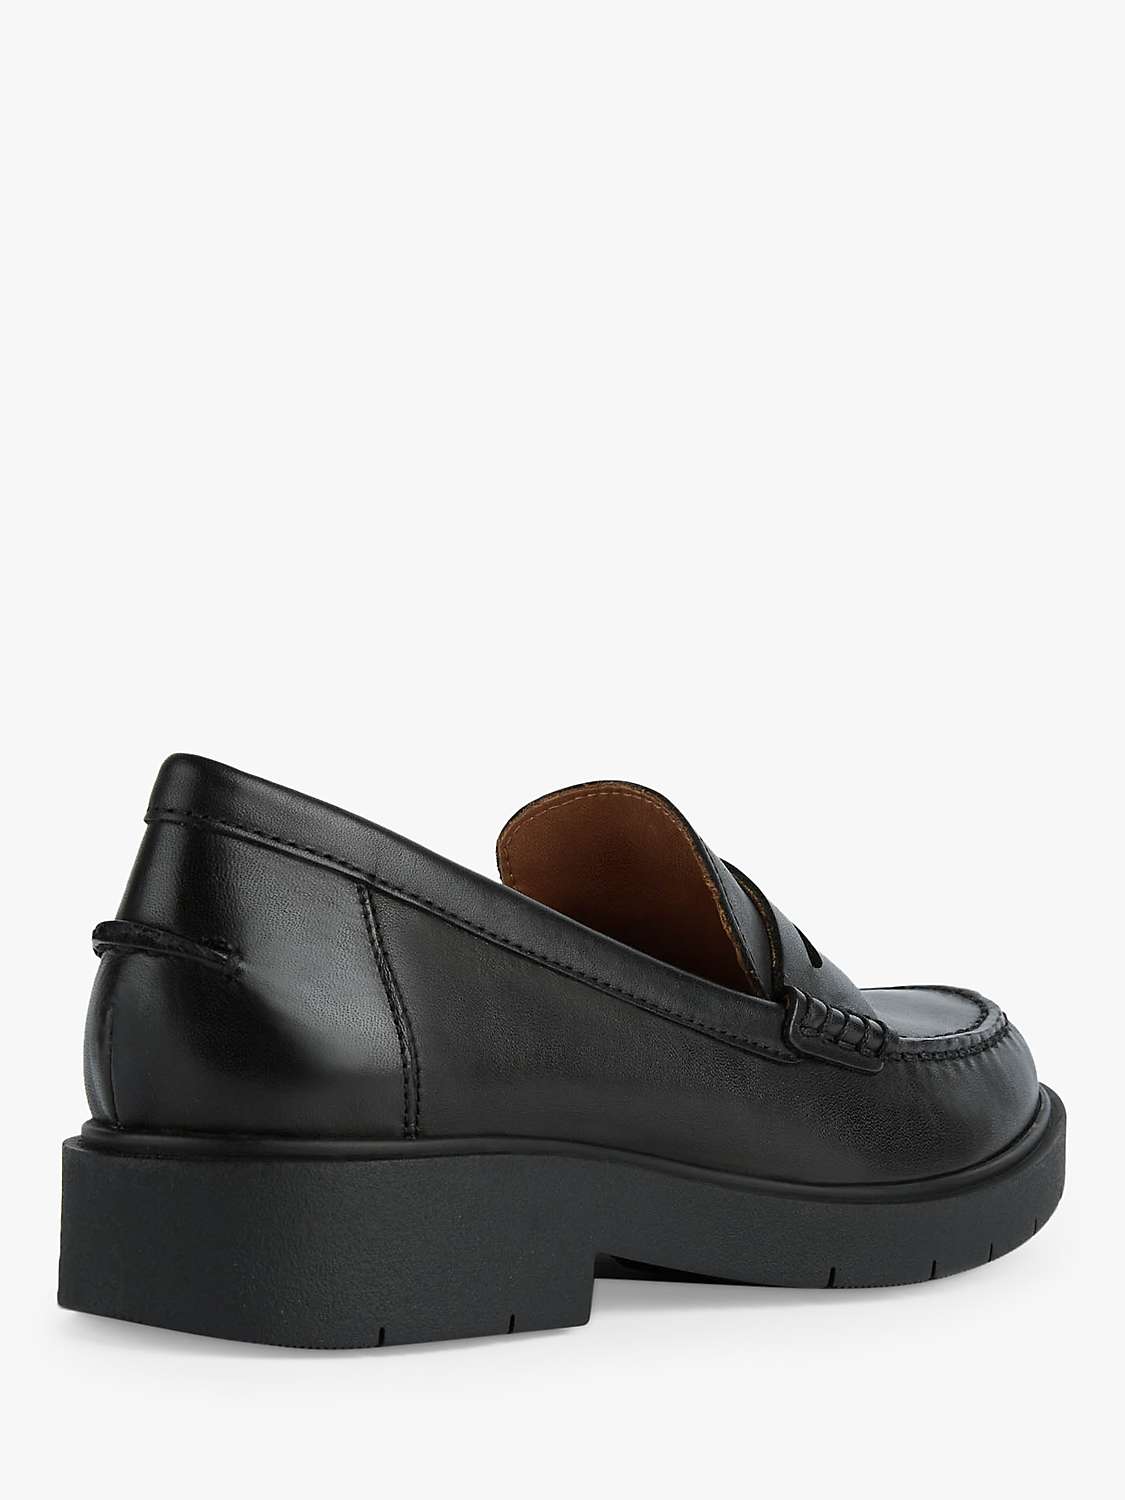 Buy Geox Spherica EC1 Leather Loafers, Black Online at johnlewis.com